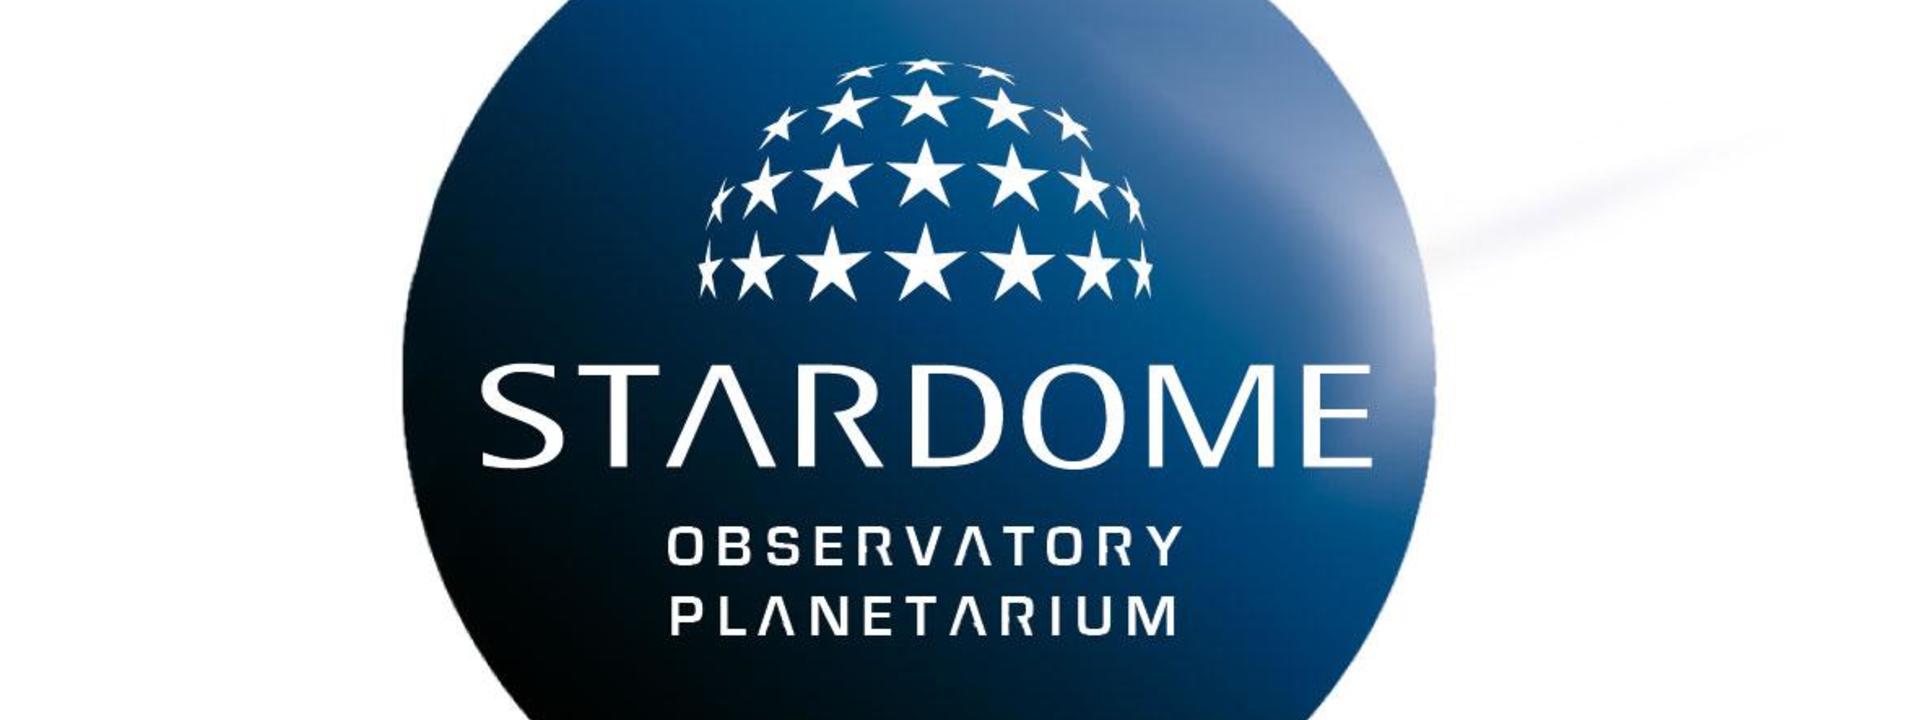 Stardome---Blue-Circle---Planetarium-added_web